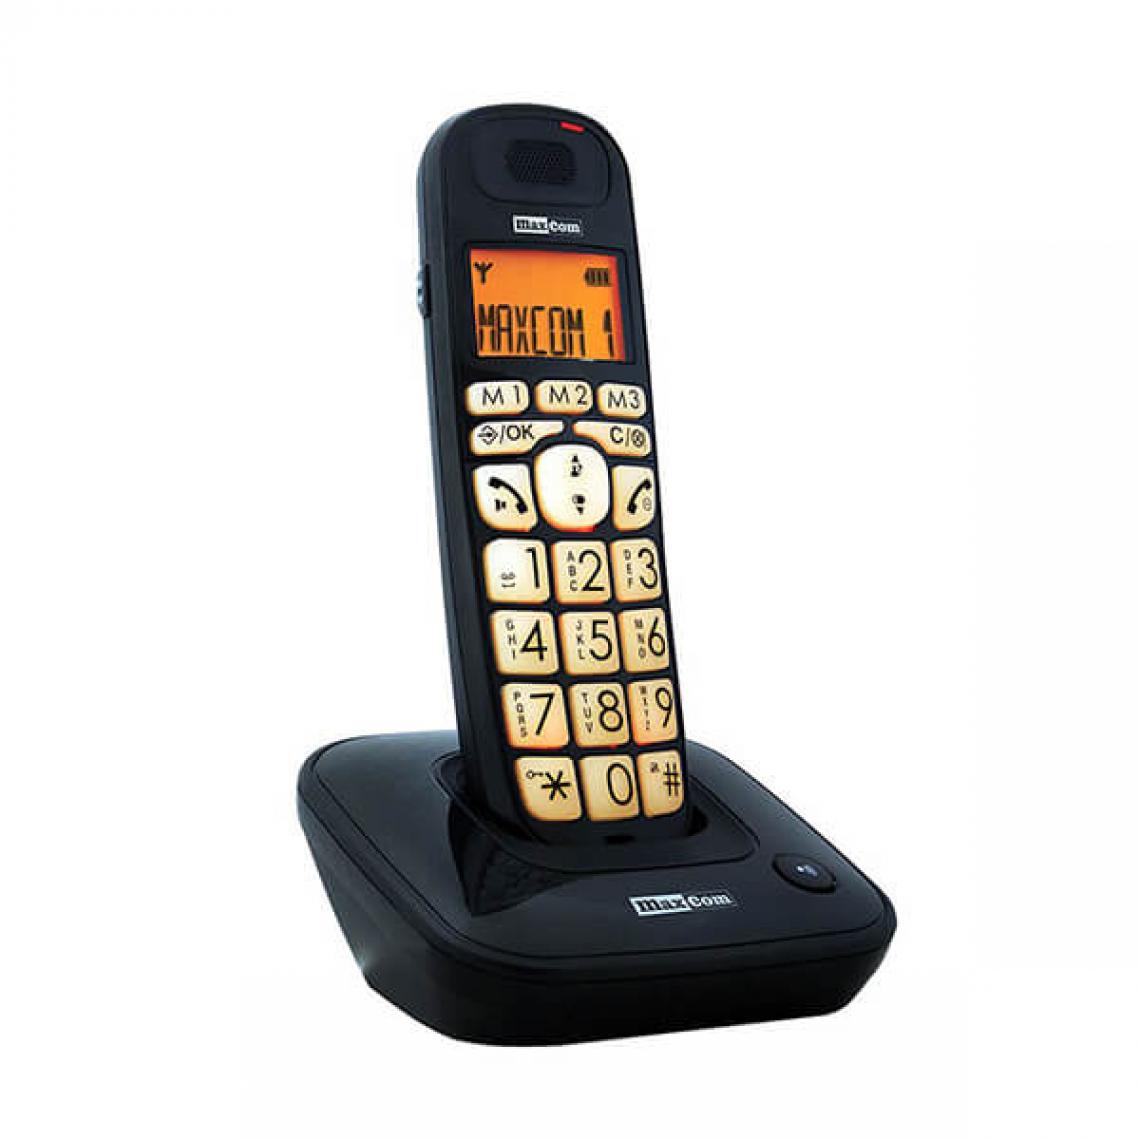 Maxcom - Maxcom MC6800 Teléphone sans fil DECT Noir (Black) - Téléphone fixe sans fil